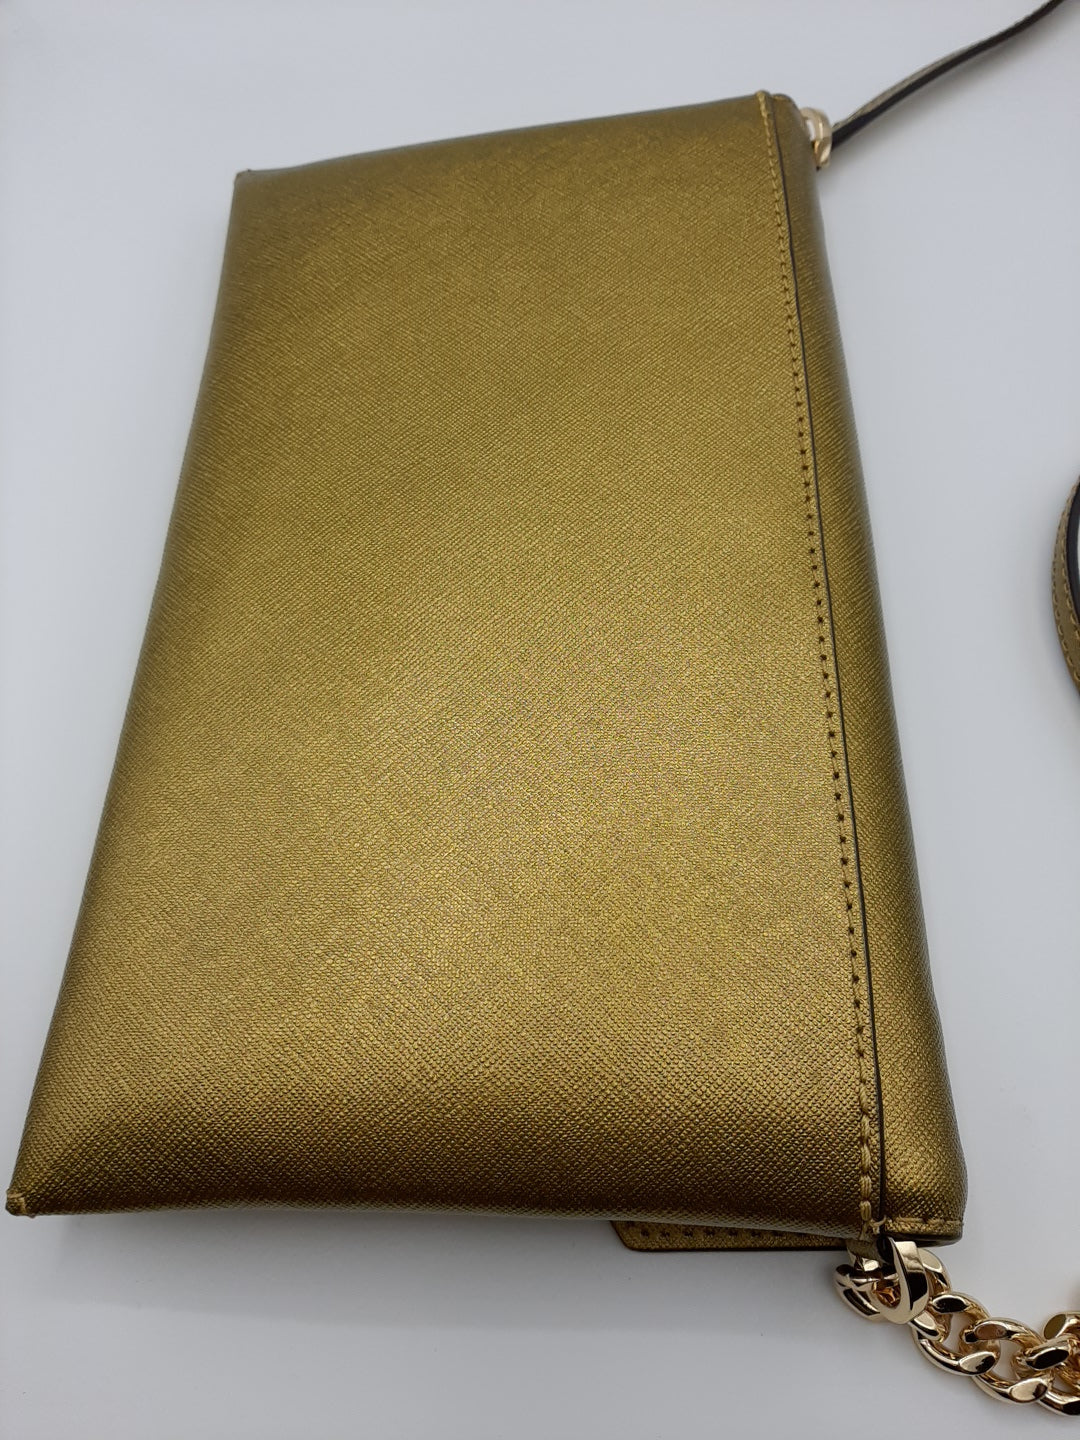 Michael Kors Jet Set Item Medium Envelope Clutch Crossbody Bag / Old Gold Leather